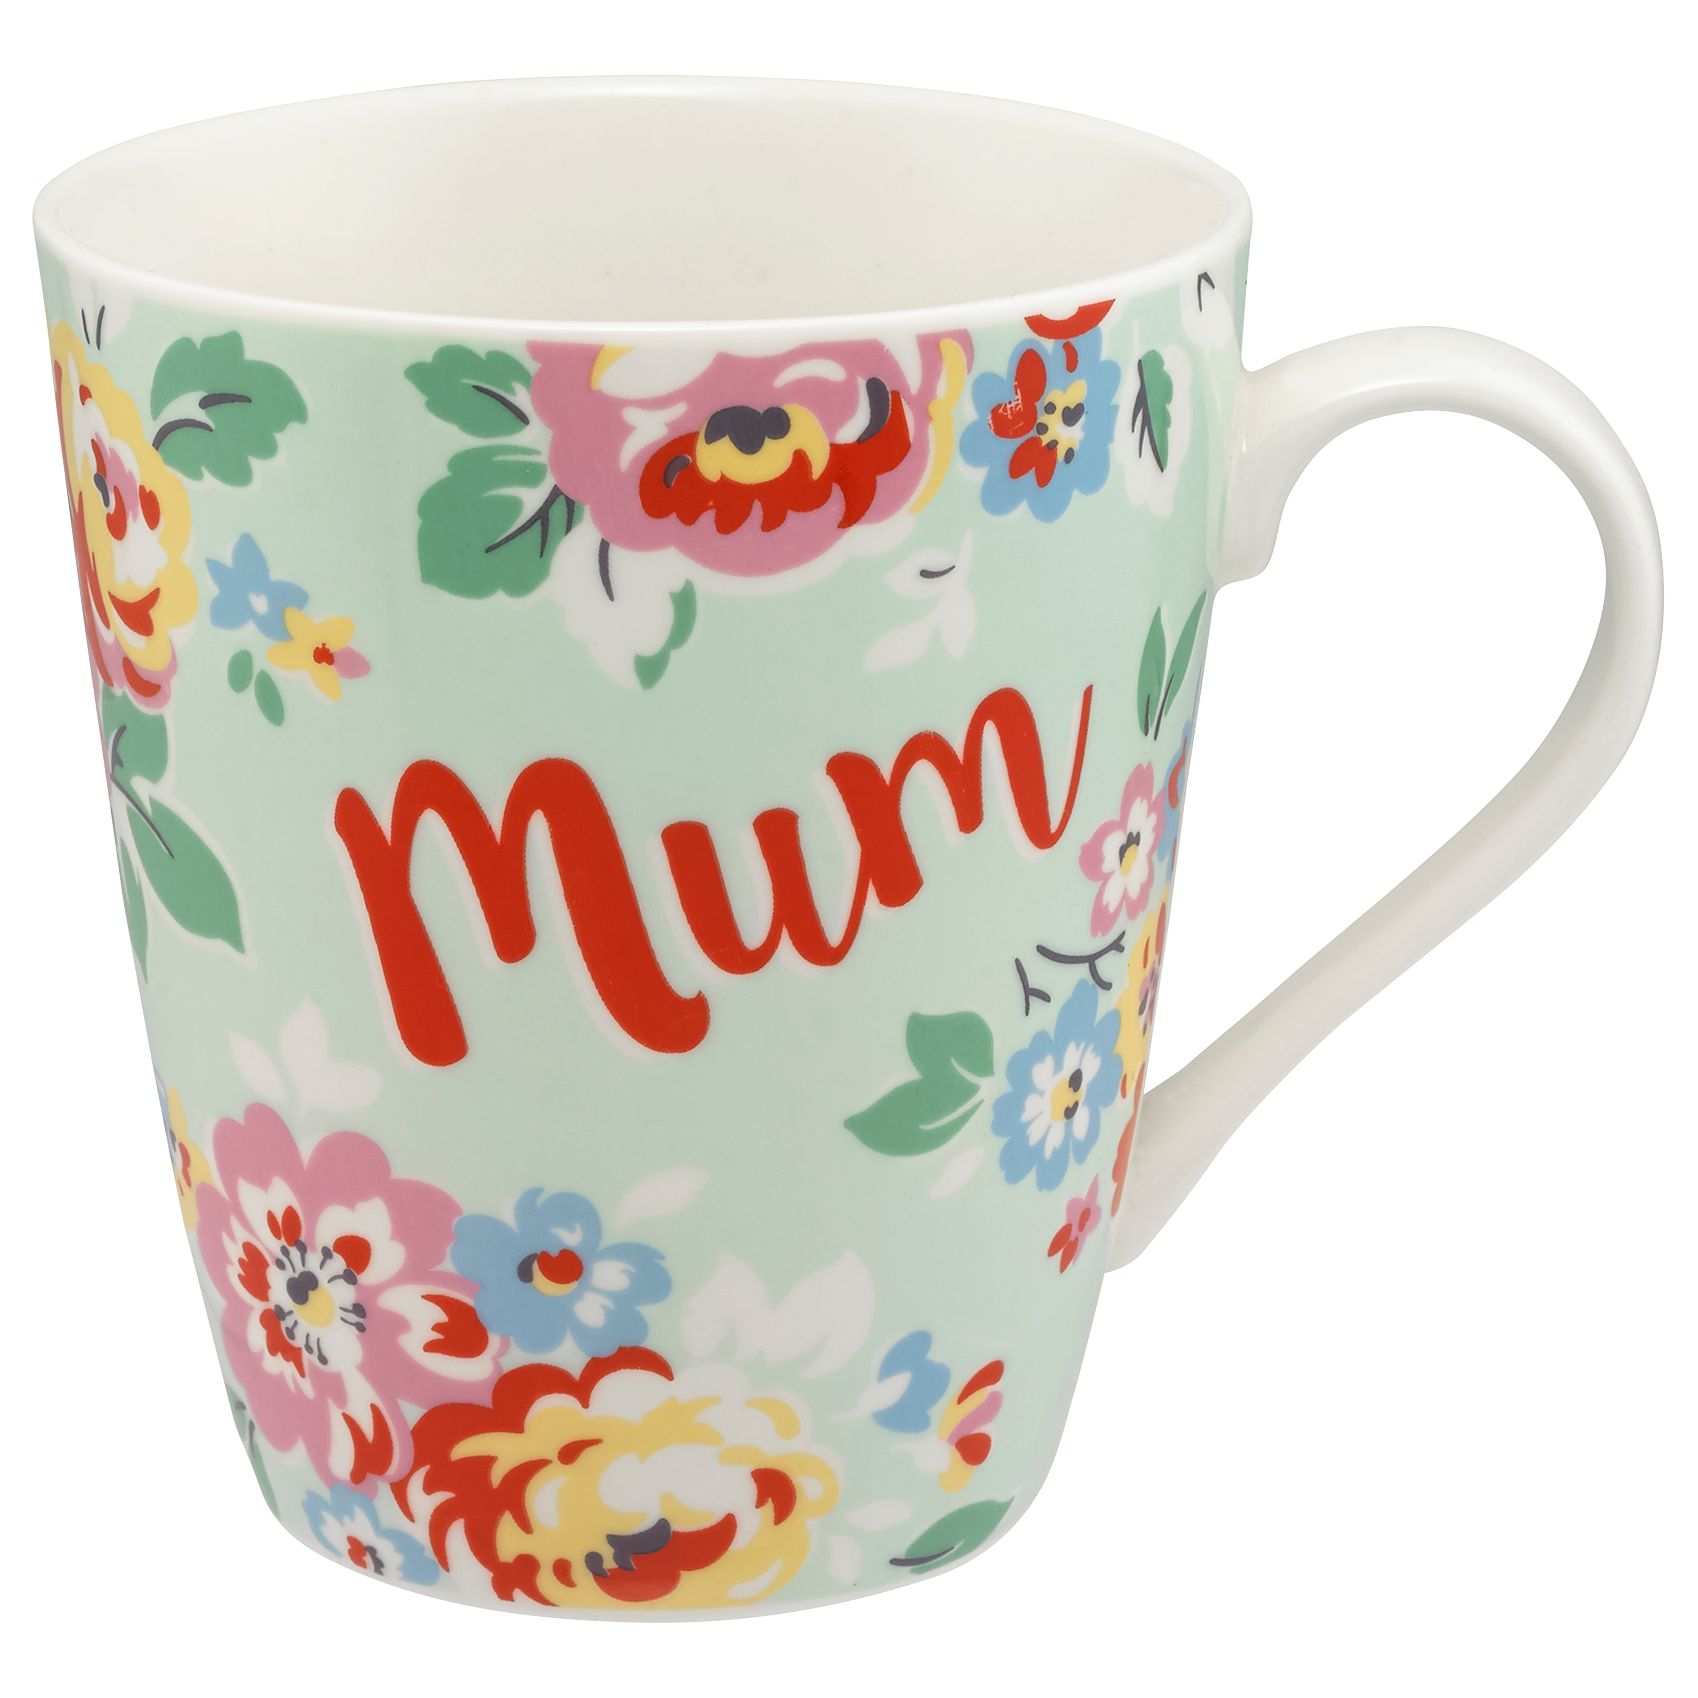 Cath Kidston Wells Rose Mum Mug, Soft 